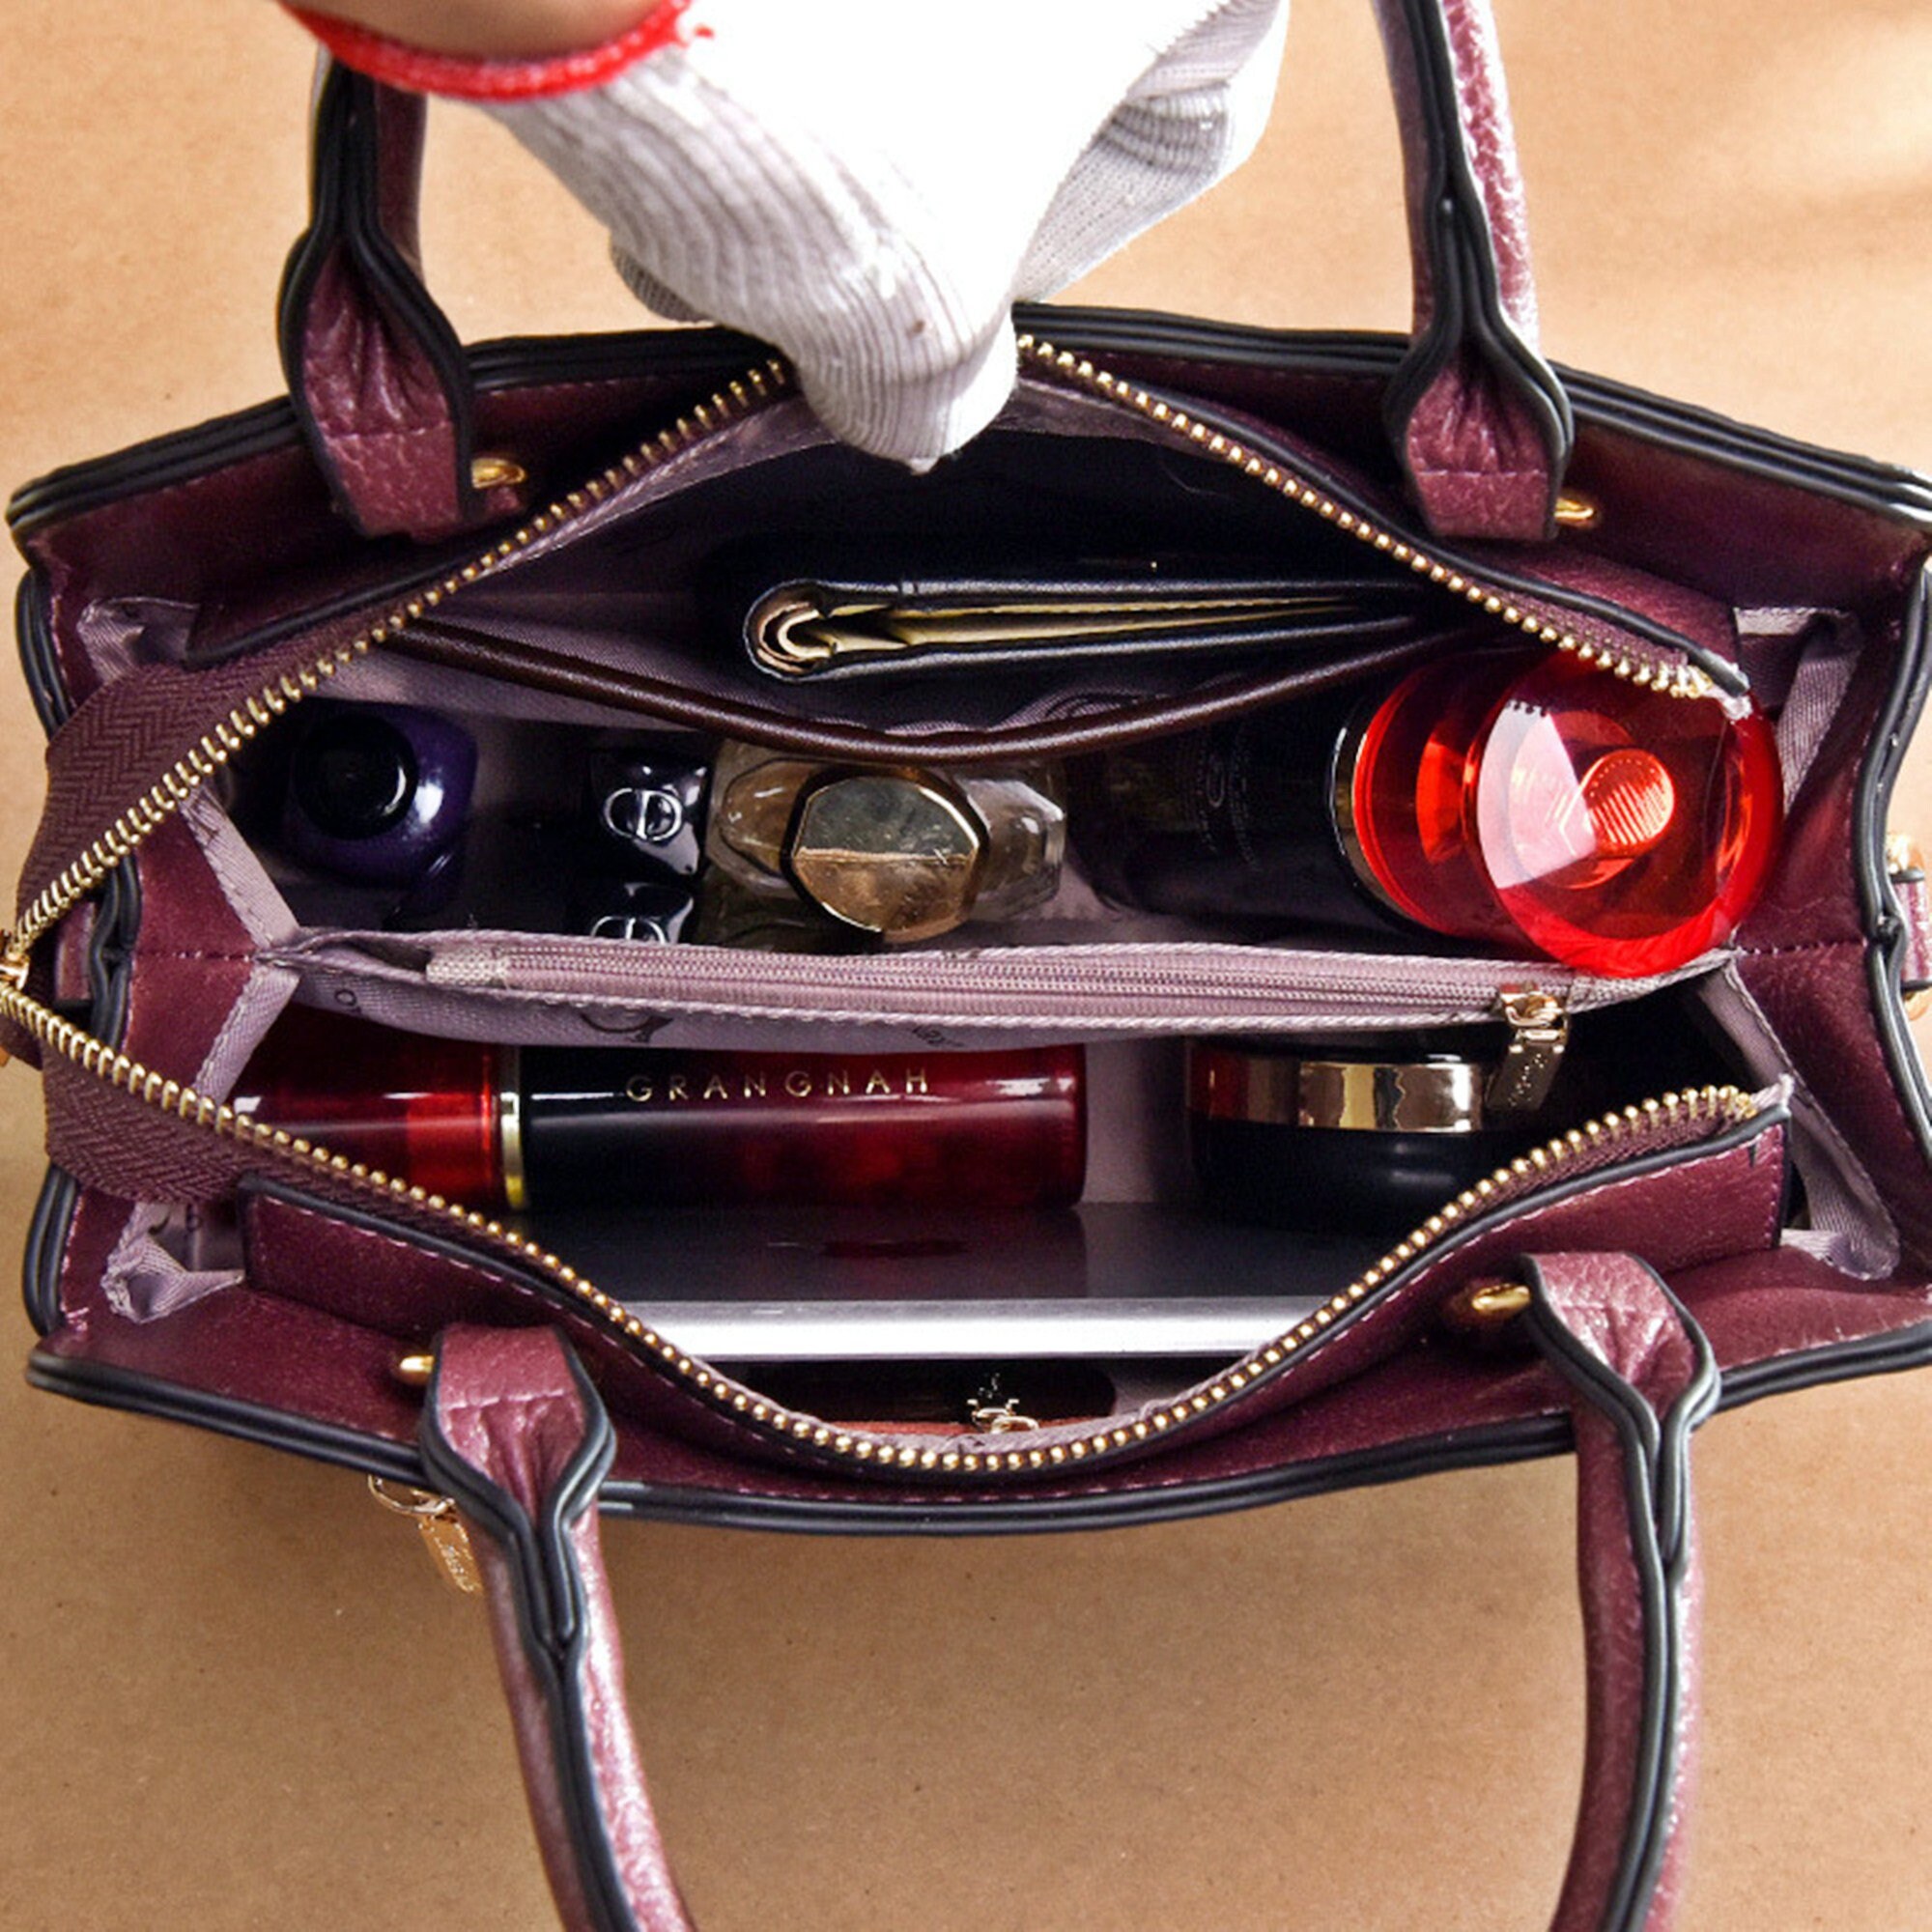  Downupdown Women Handbags and Purses Set Crocodile Pattern Tote  Bags Top Handle Handbags Wristlets Wallet Shoulder Bag Satchel 3 Pcs with  Shoulder Strap-Black : Clothing, Shoes & Jewelry